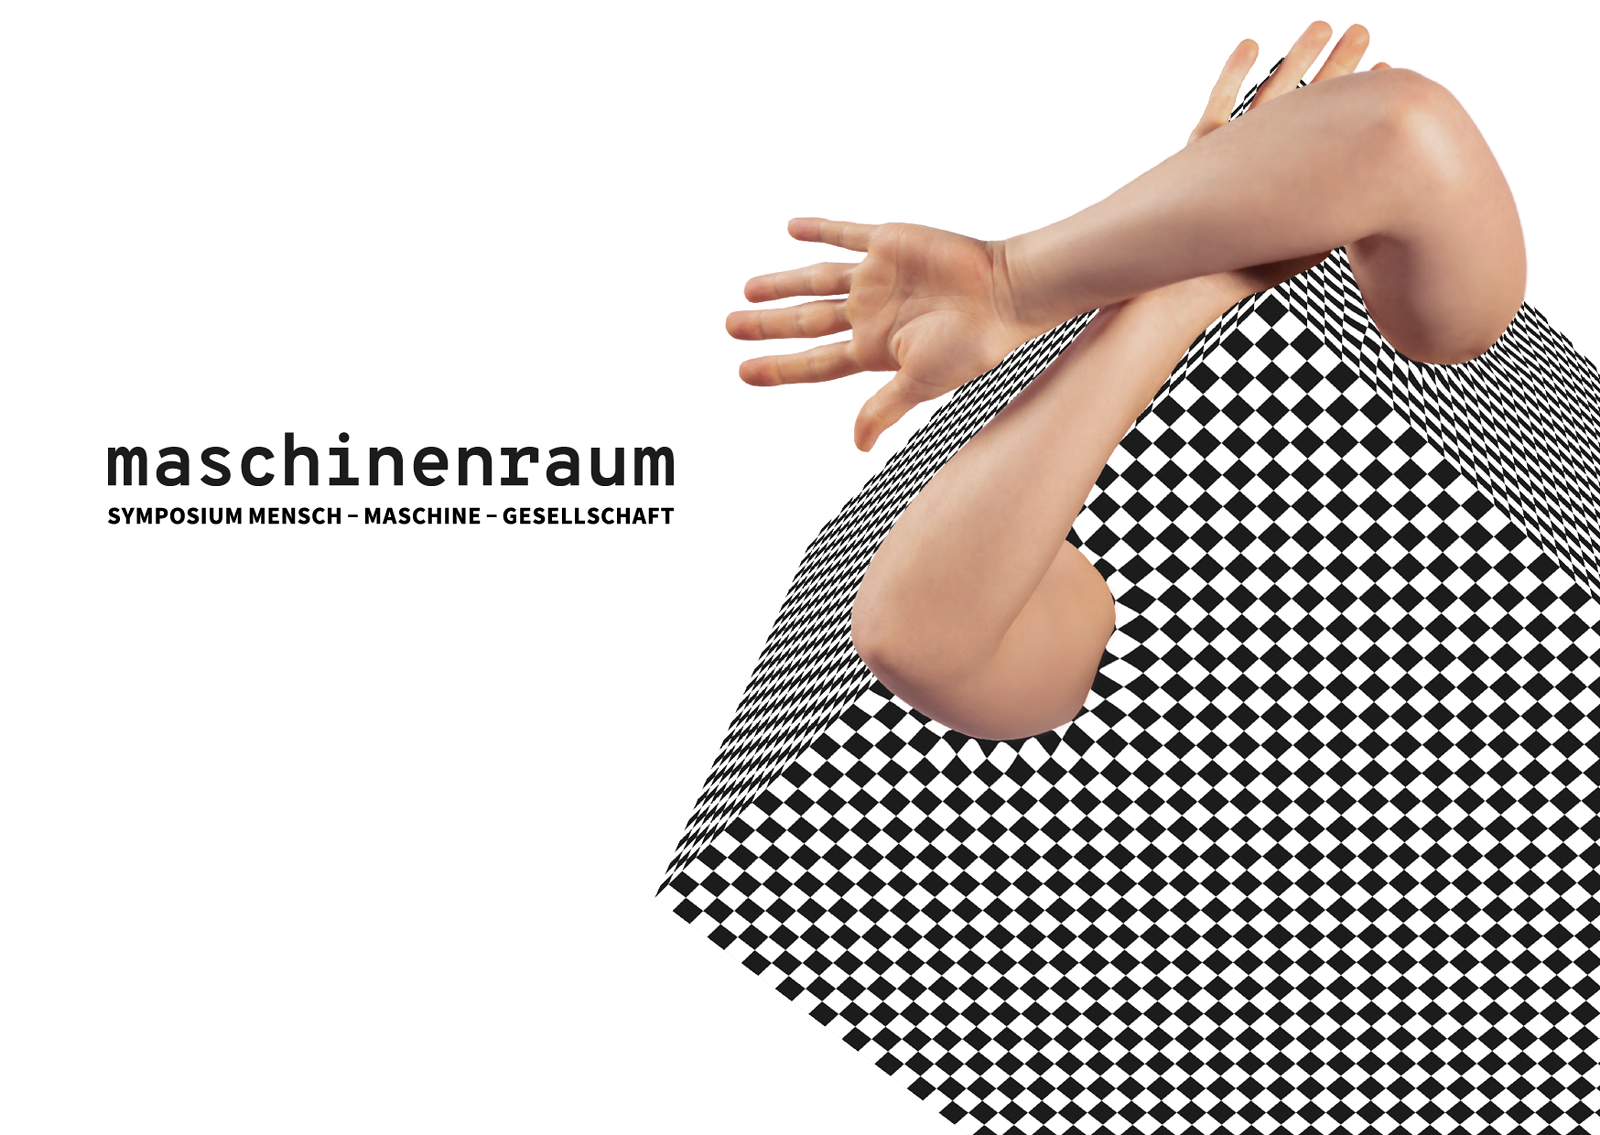 Maschinenraum 2019: Symposium Mensch - Maschine - Gesellschaft